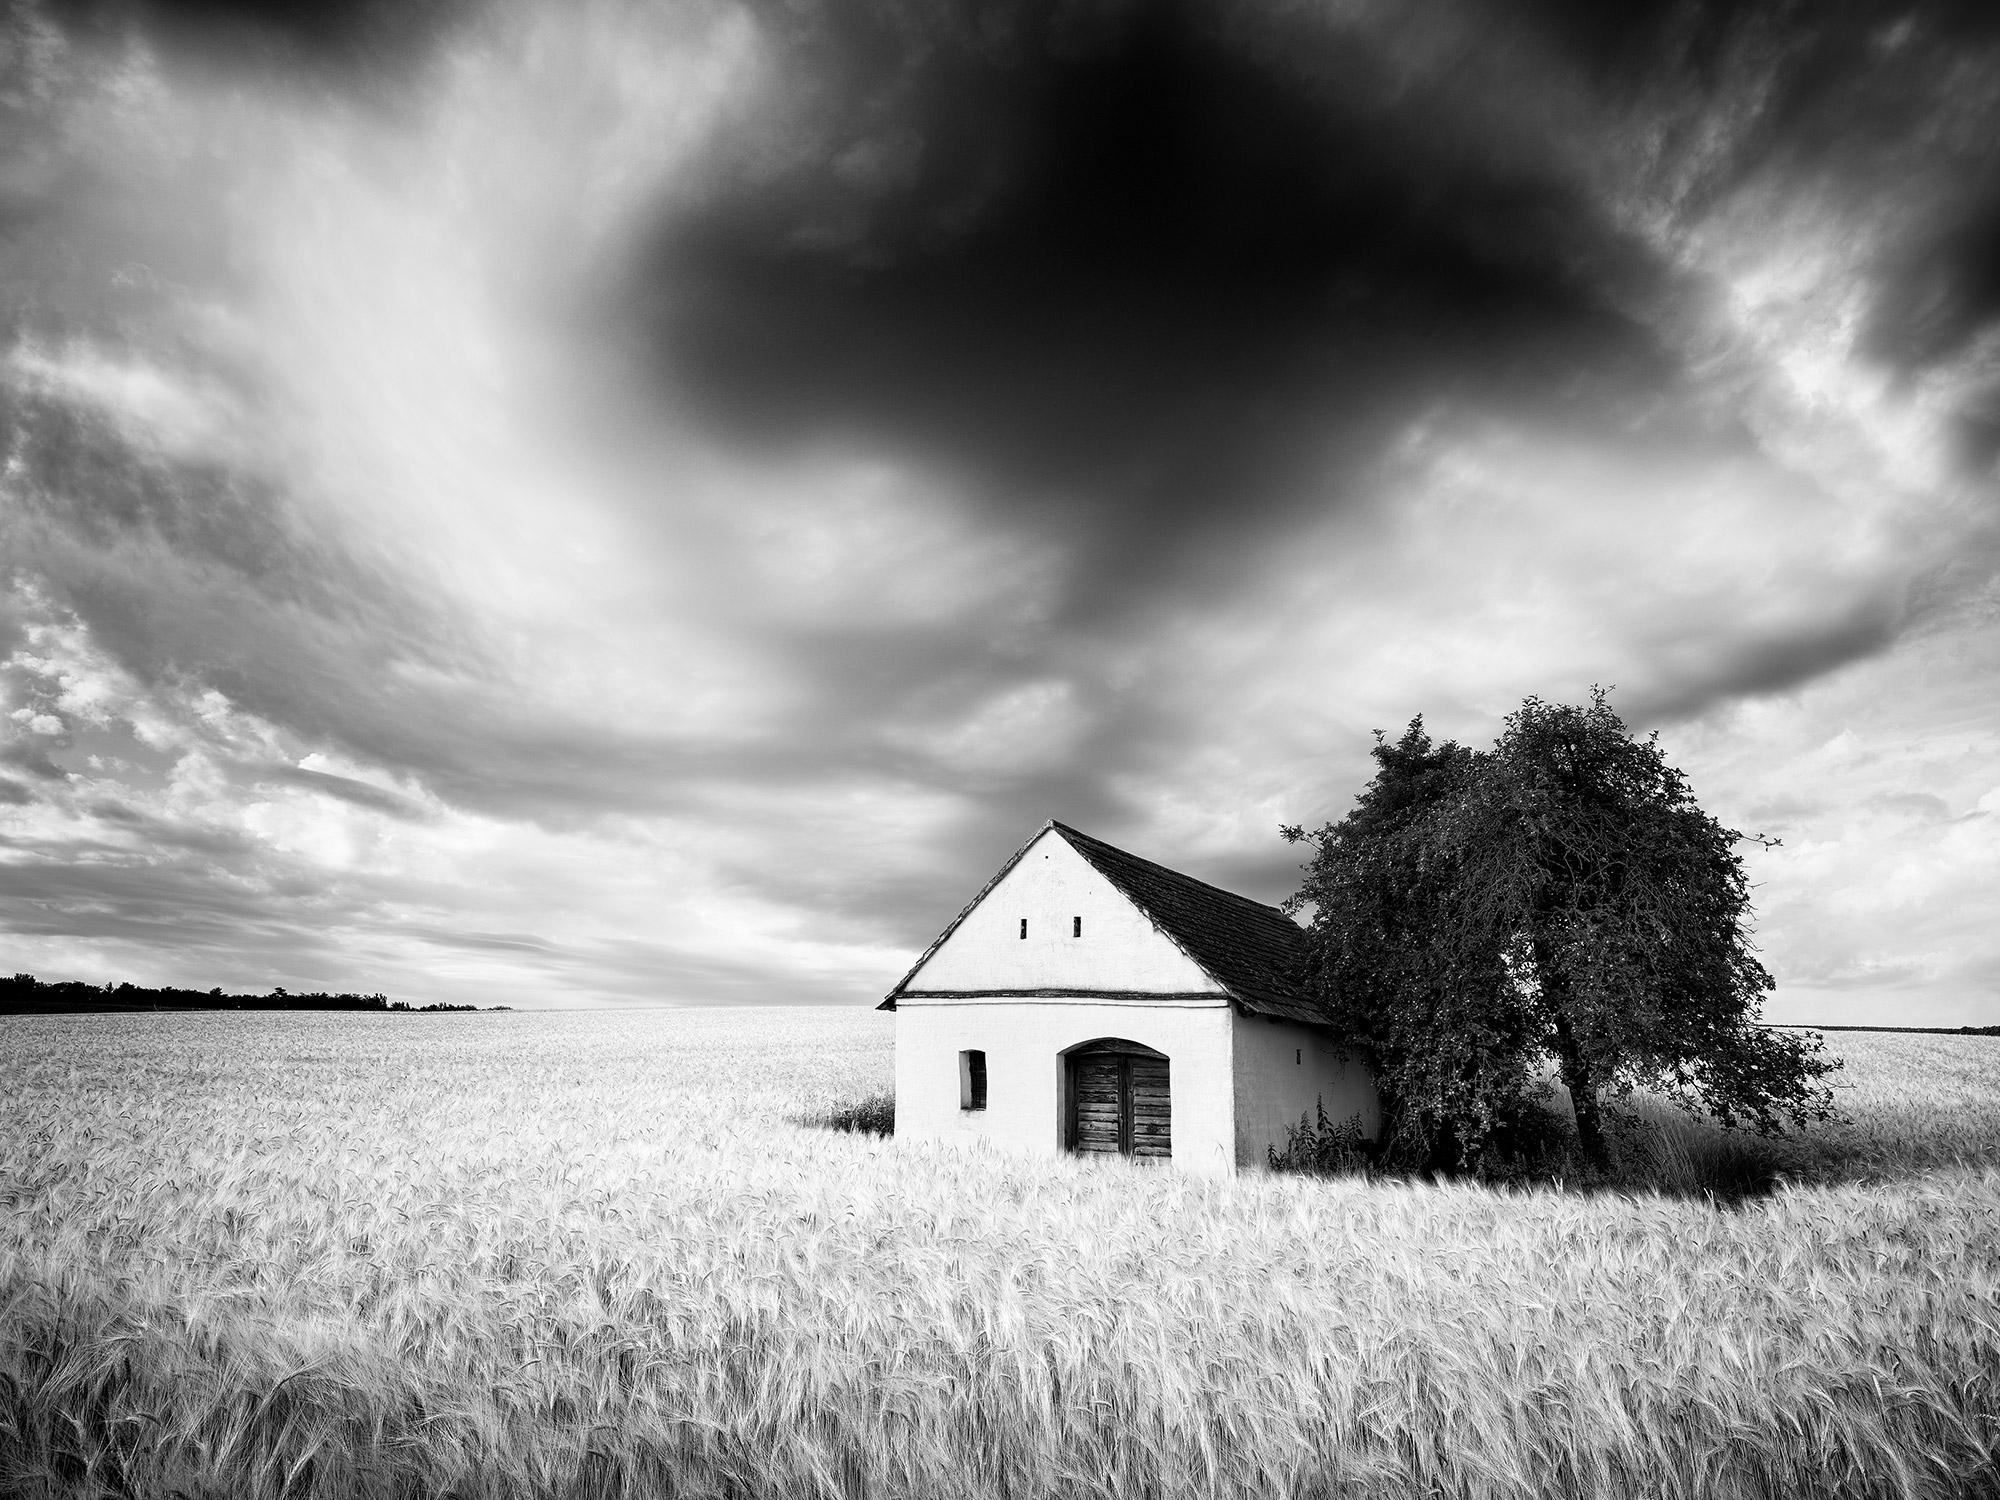 Wine Press House, wheat field, heavy cloud, black & white landscape photography